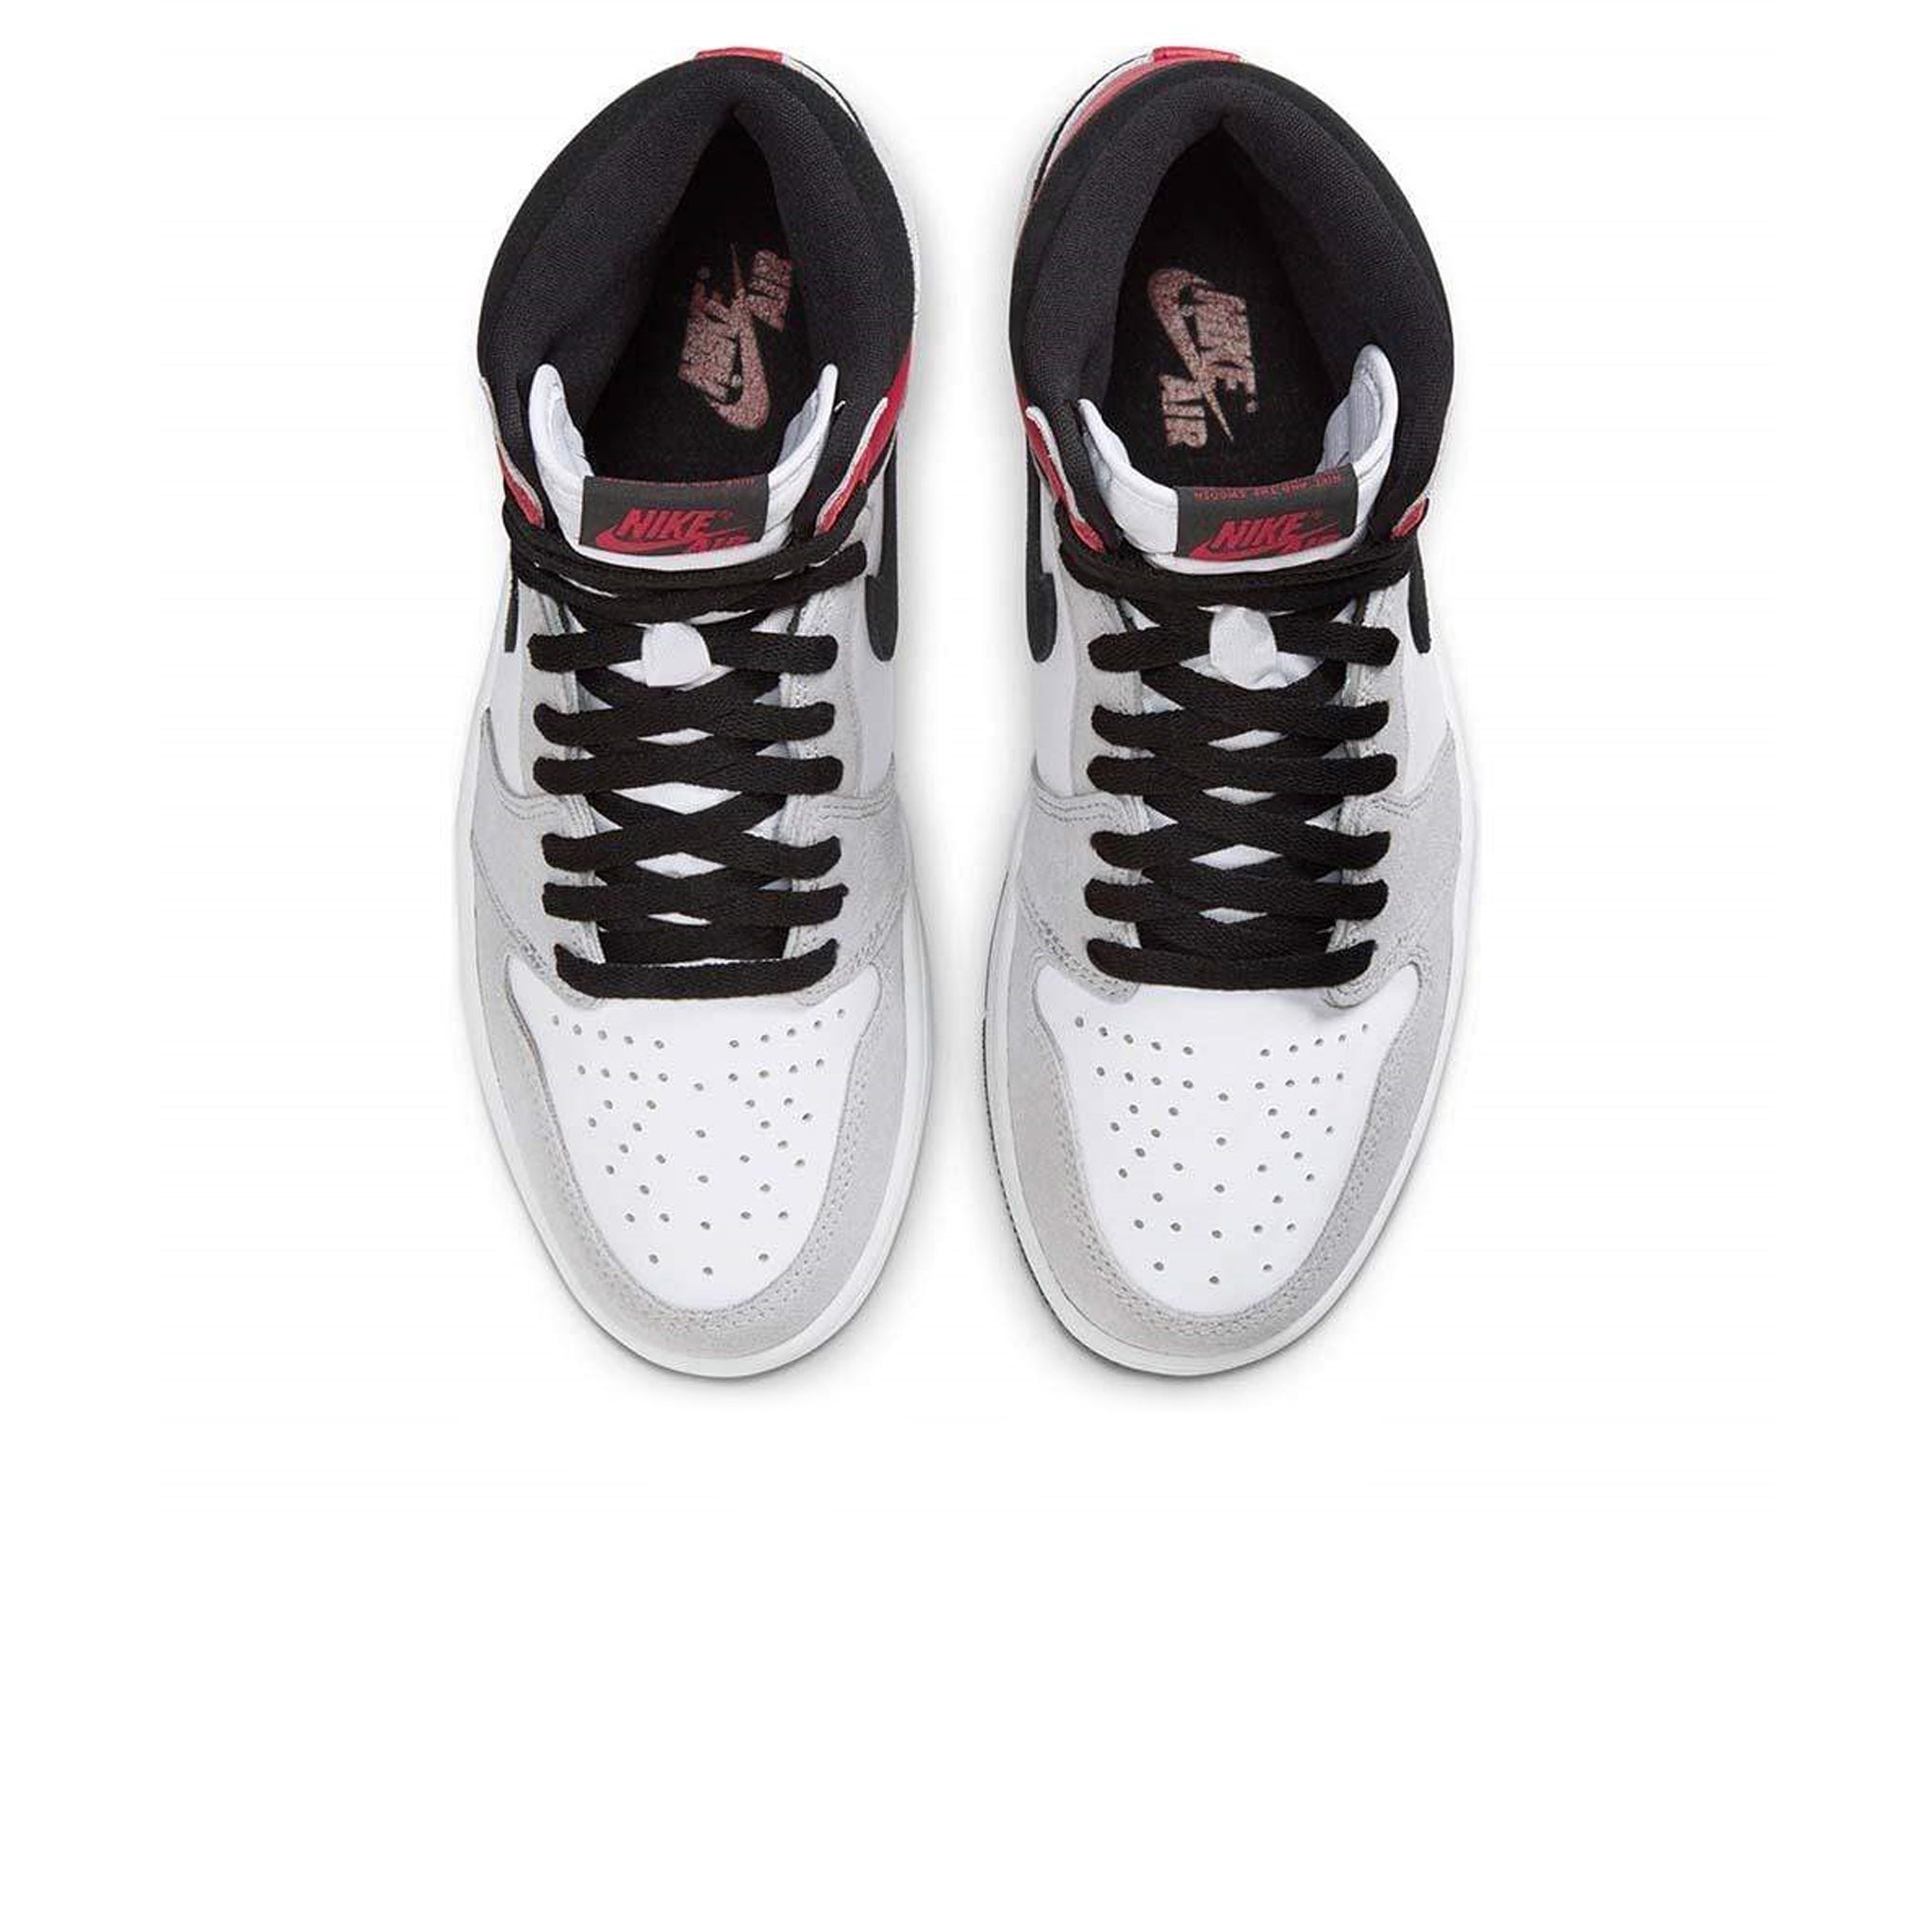 Top down view of Air Jordan 1 High Light Smoke Grey Sneaker 555088-126